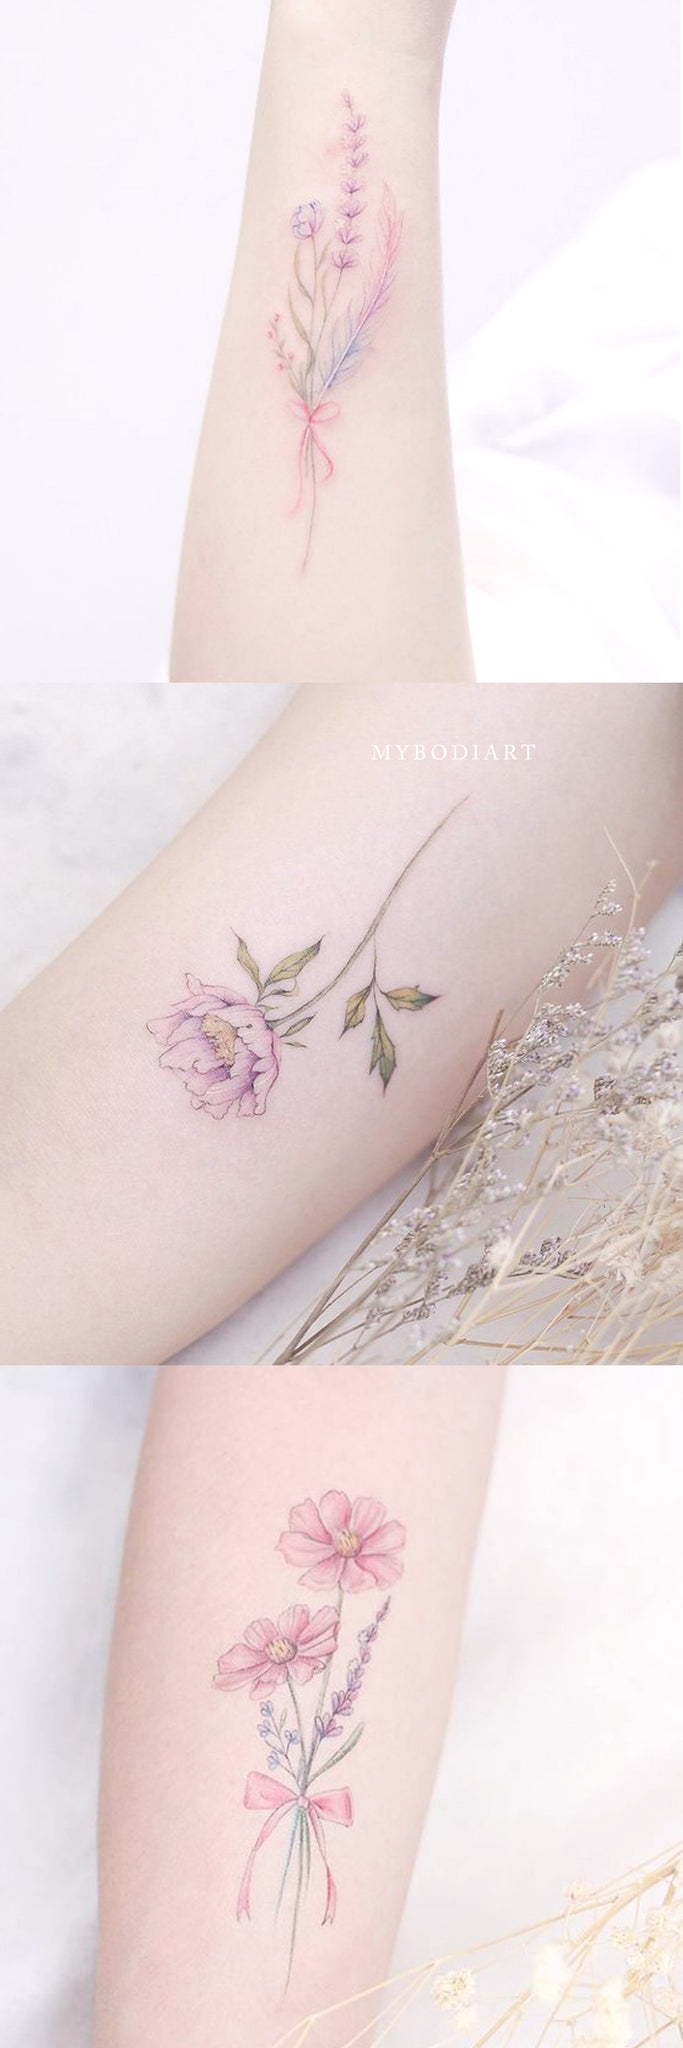 Cute Delicate Watercolor Floral Flower Arm Tattoo Ideas for Women -  ideas del tatuaje del brazo de la flor de acuarela - www.MyBodiArt.com 